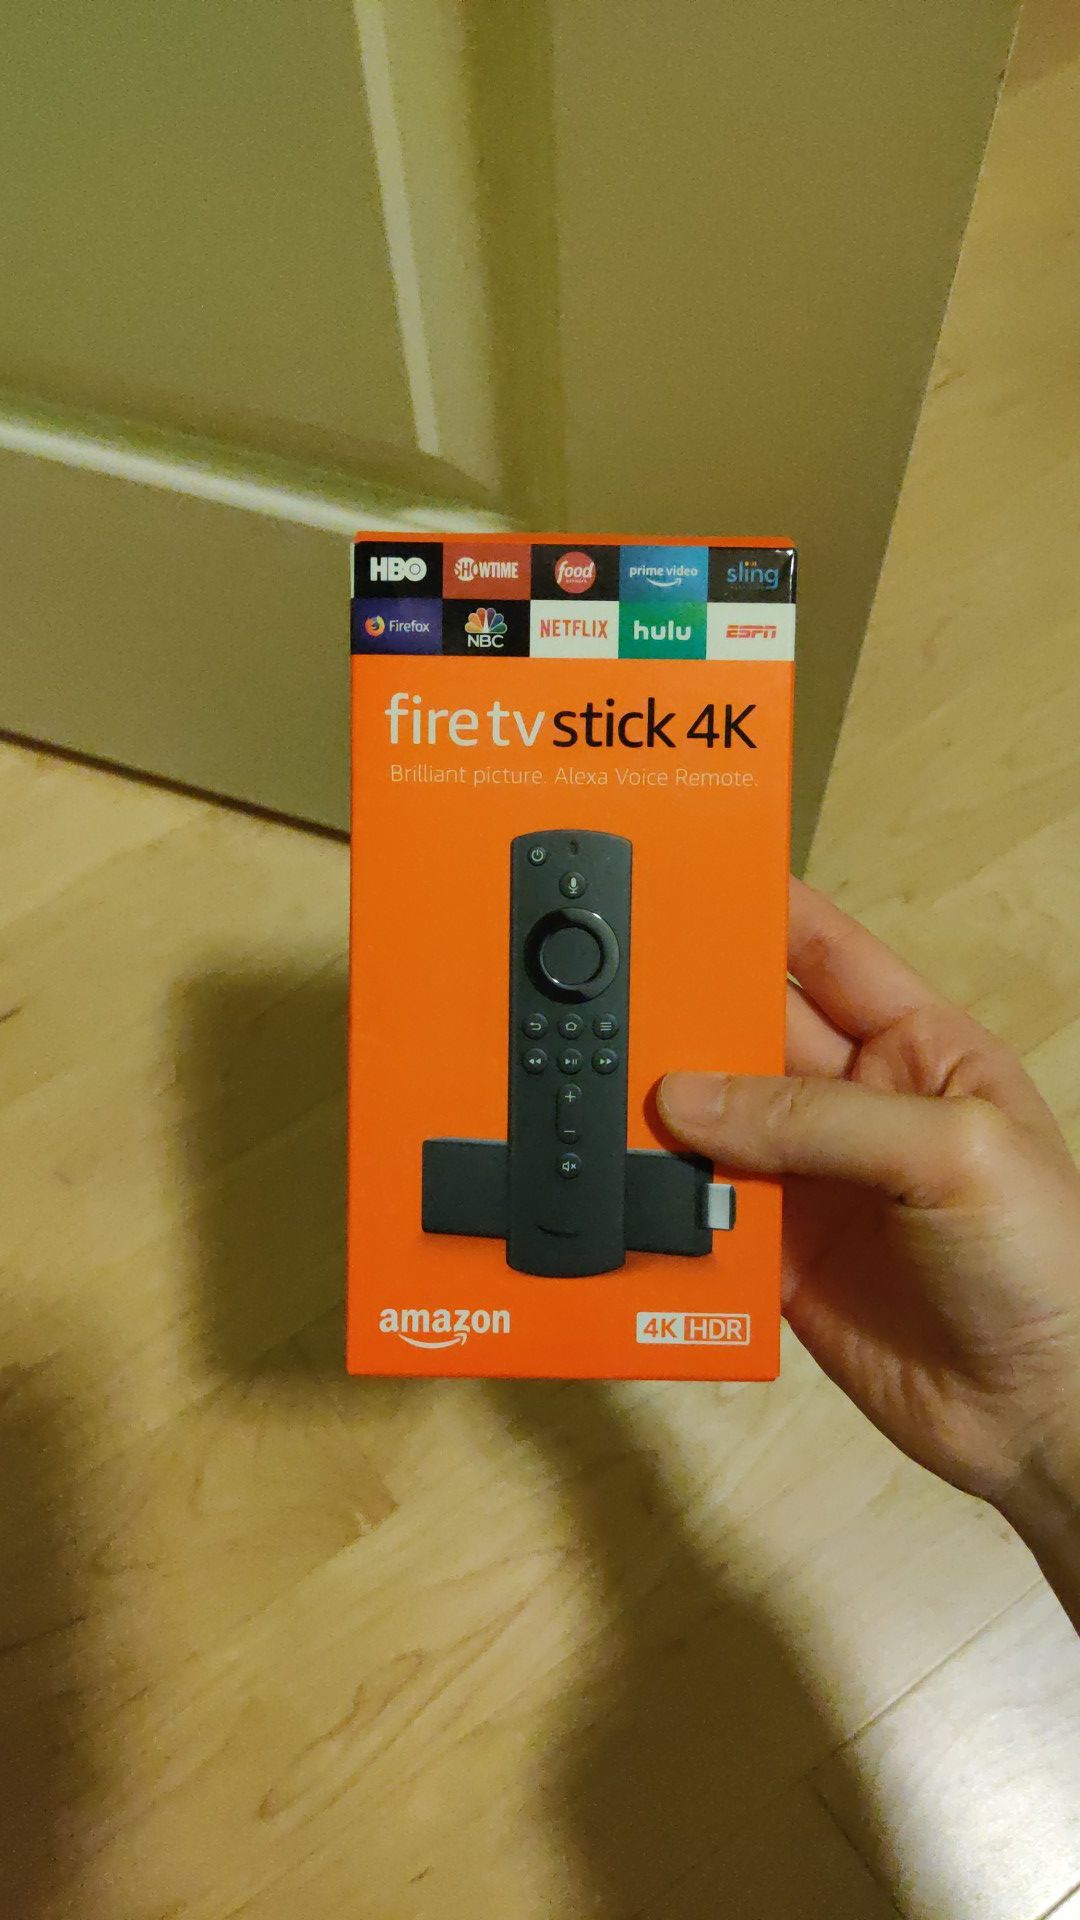 Amazon fire TV stick 4K